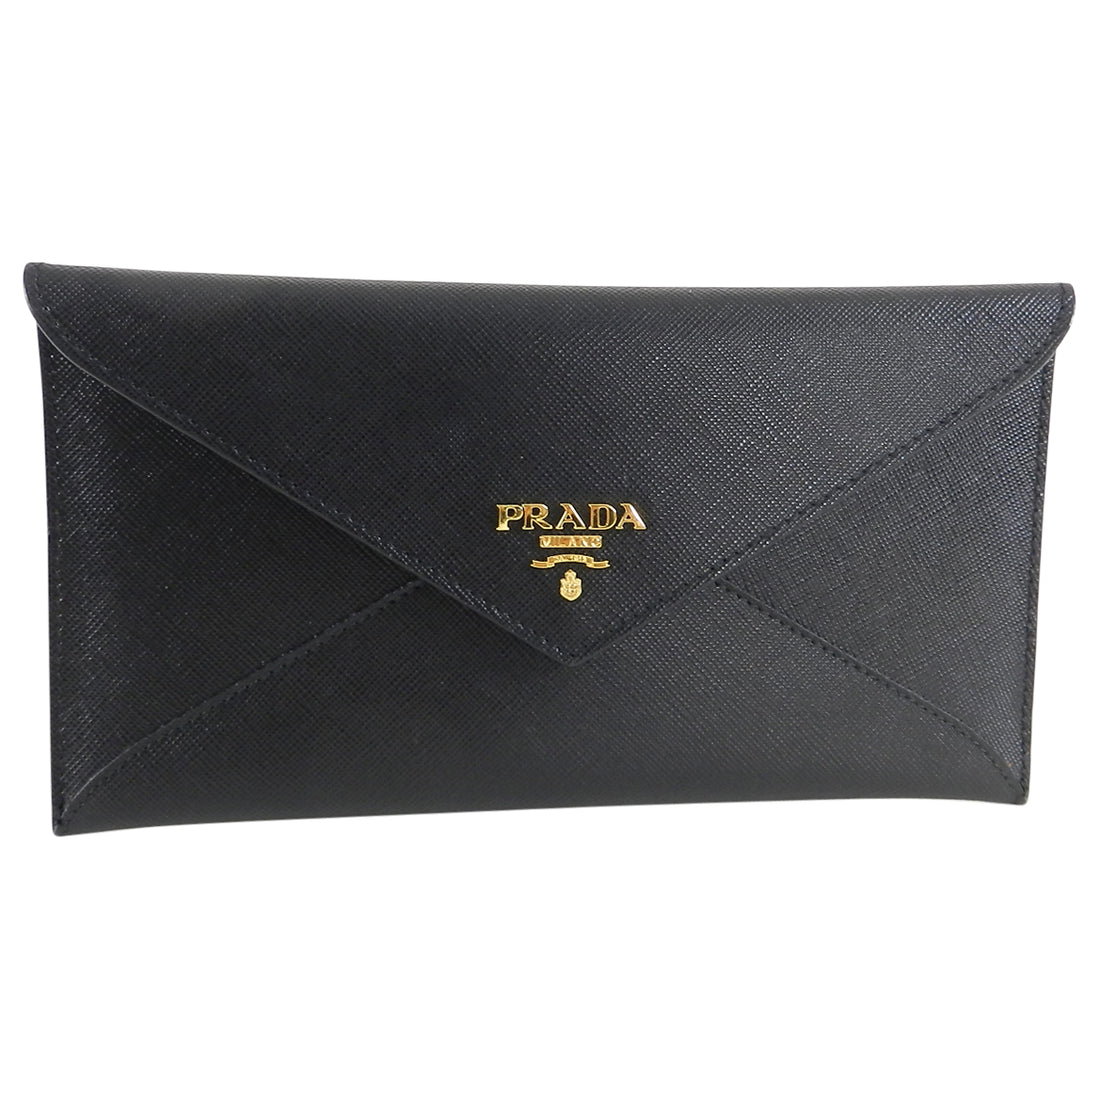 Prada Black Saffiano Leather Envelope Wallet